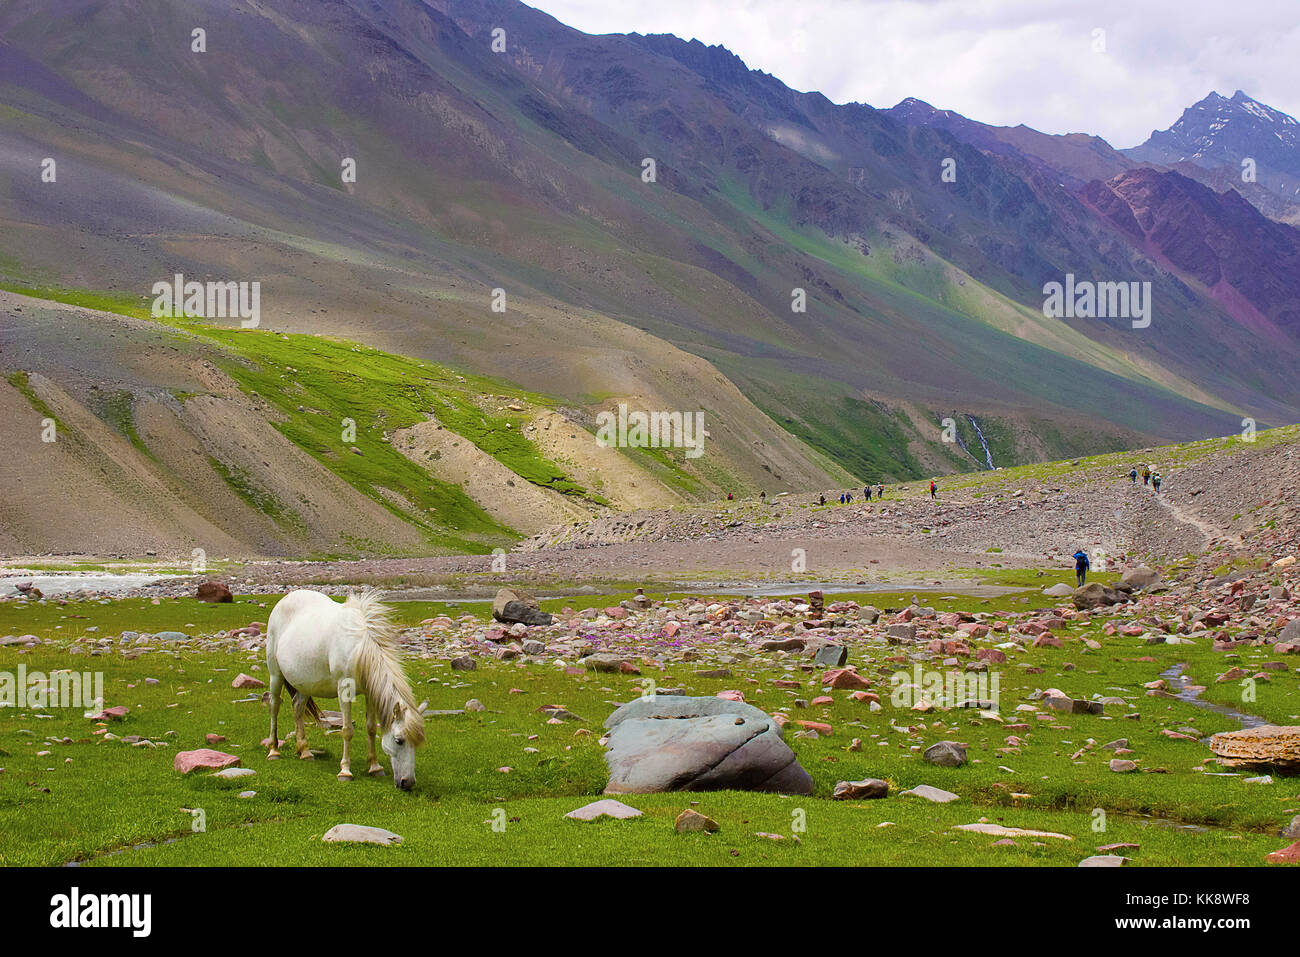 Mule grazing and trekkers walking down the hills. Himachal Pradesh, Northern India Stock Photo